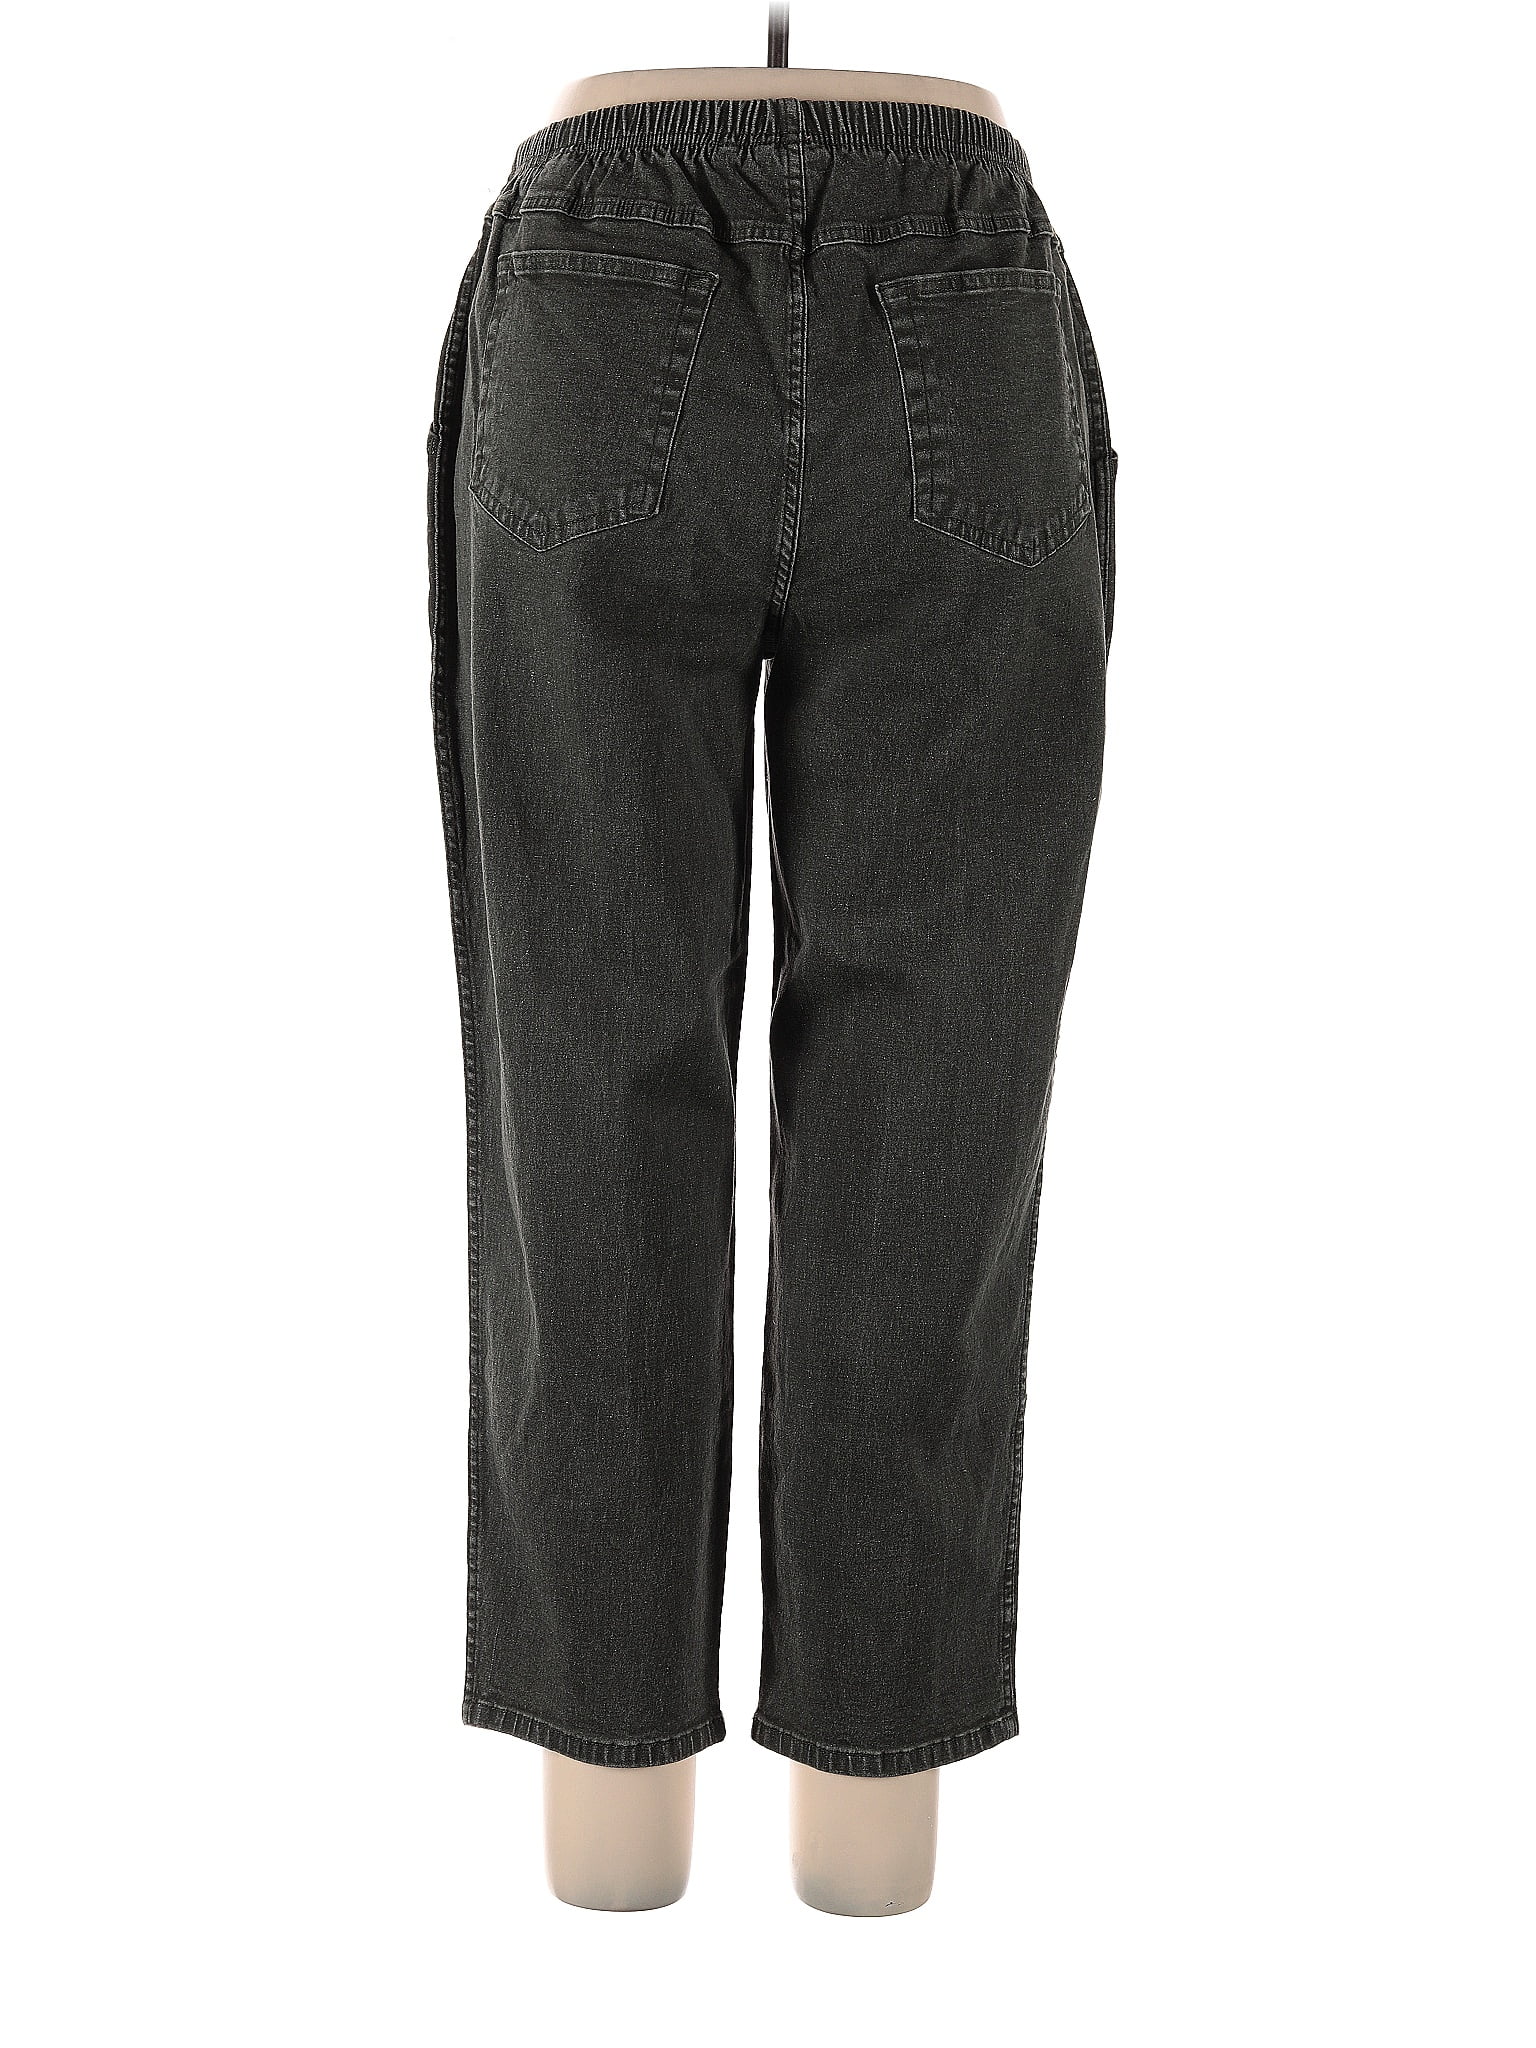 J.Jill Black Gray Casual Pants Size 3X (Plus) - 72% off